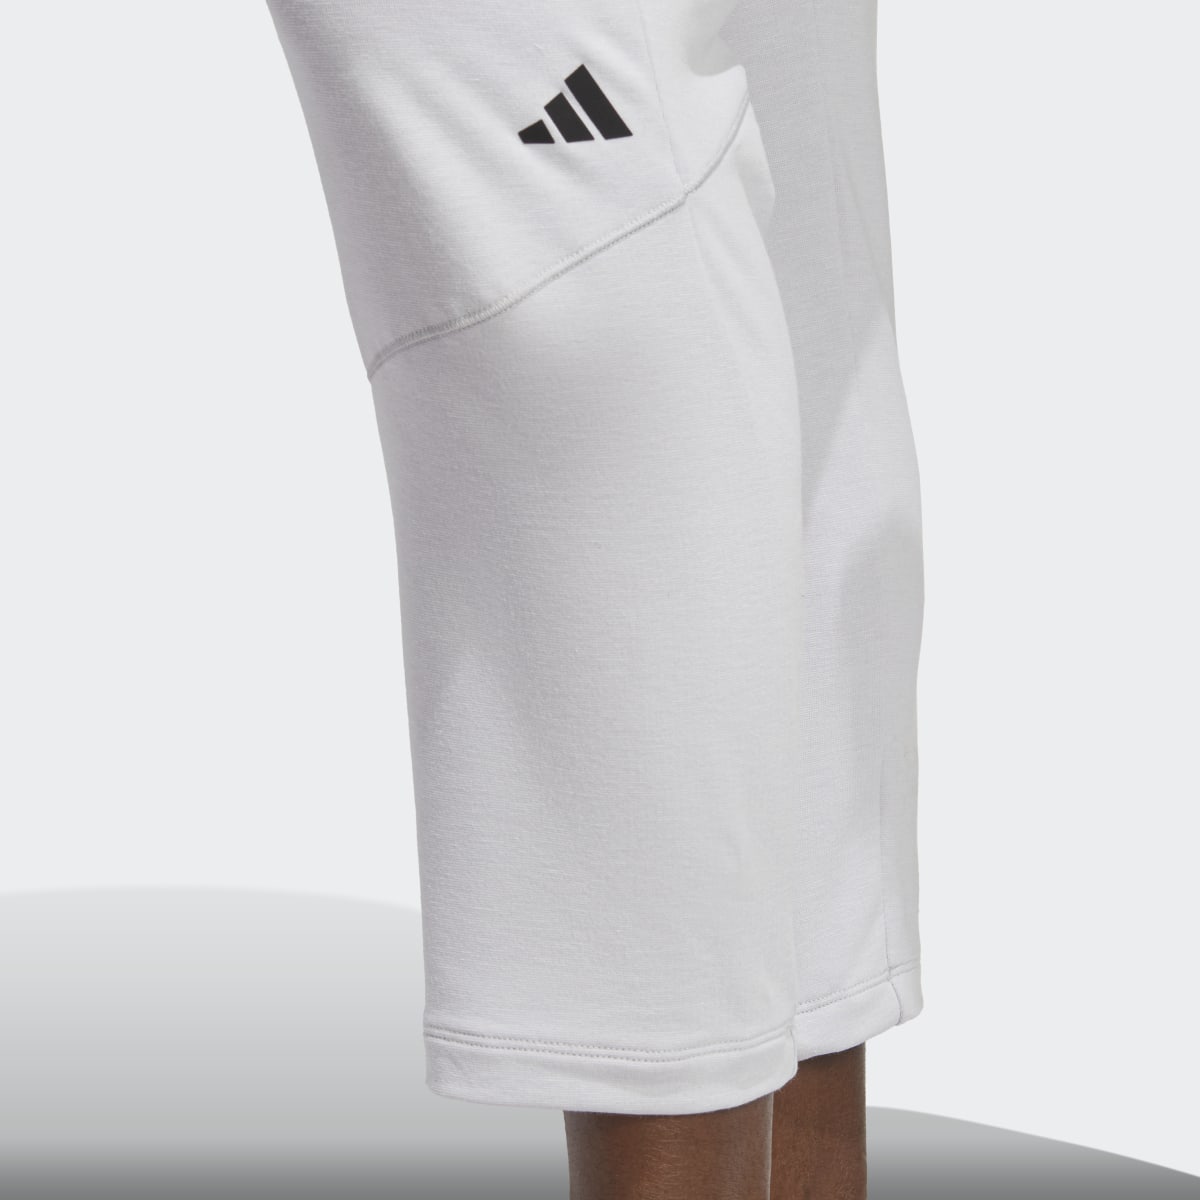 Adidas Pants de Yoga Designed for Training 7/8. 5